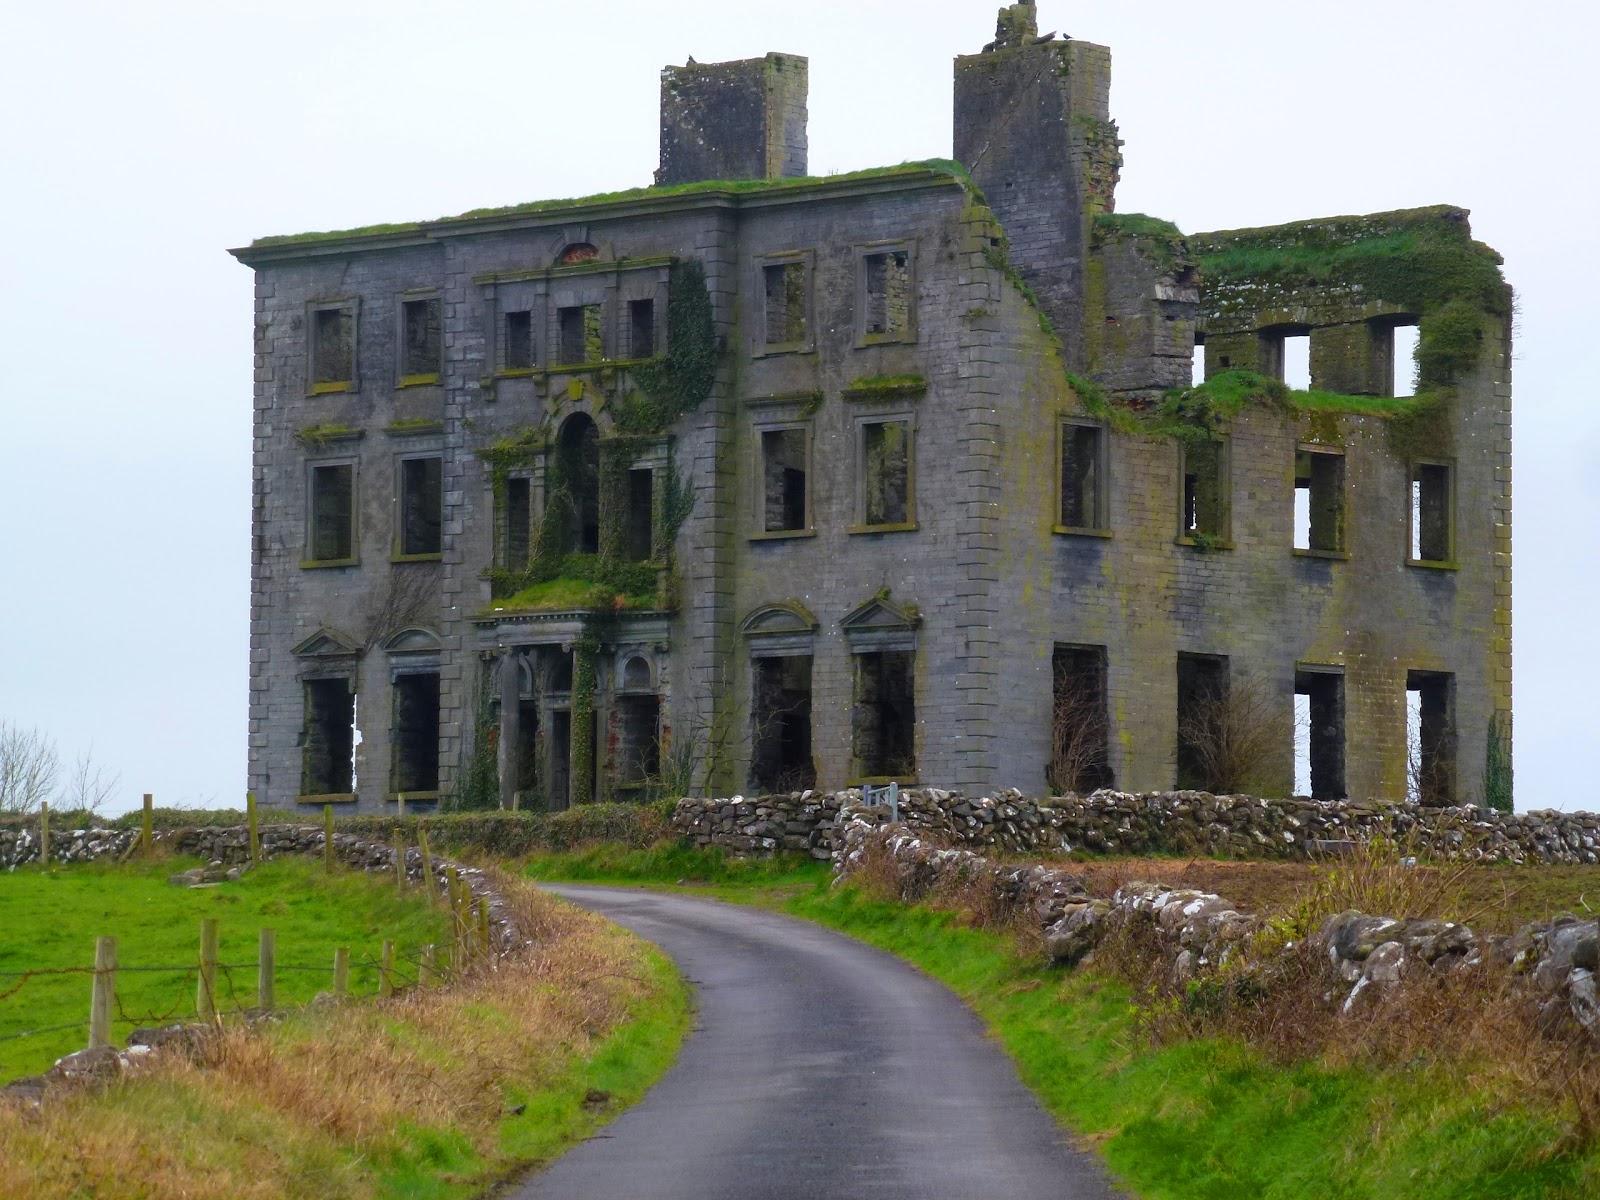 Paddys Wagon Peeking Into The Abandoned Mansions Of Ireland 